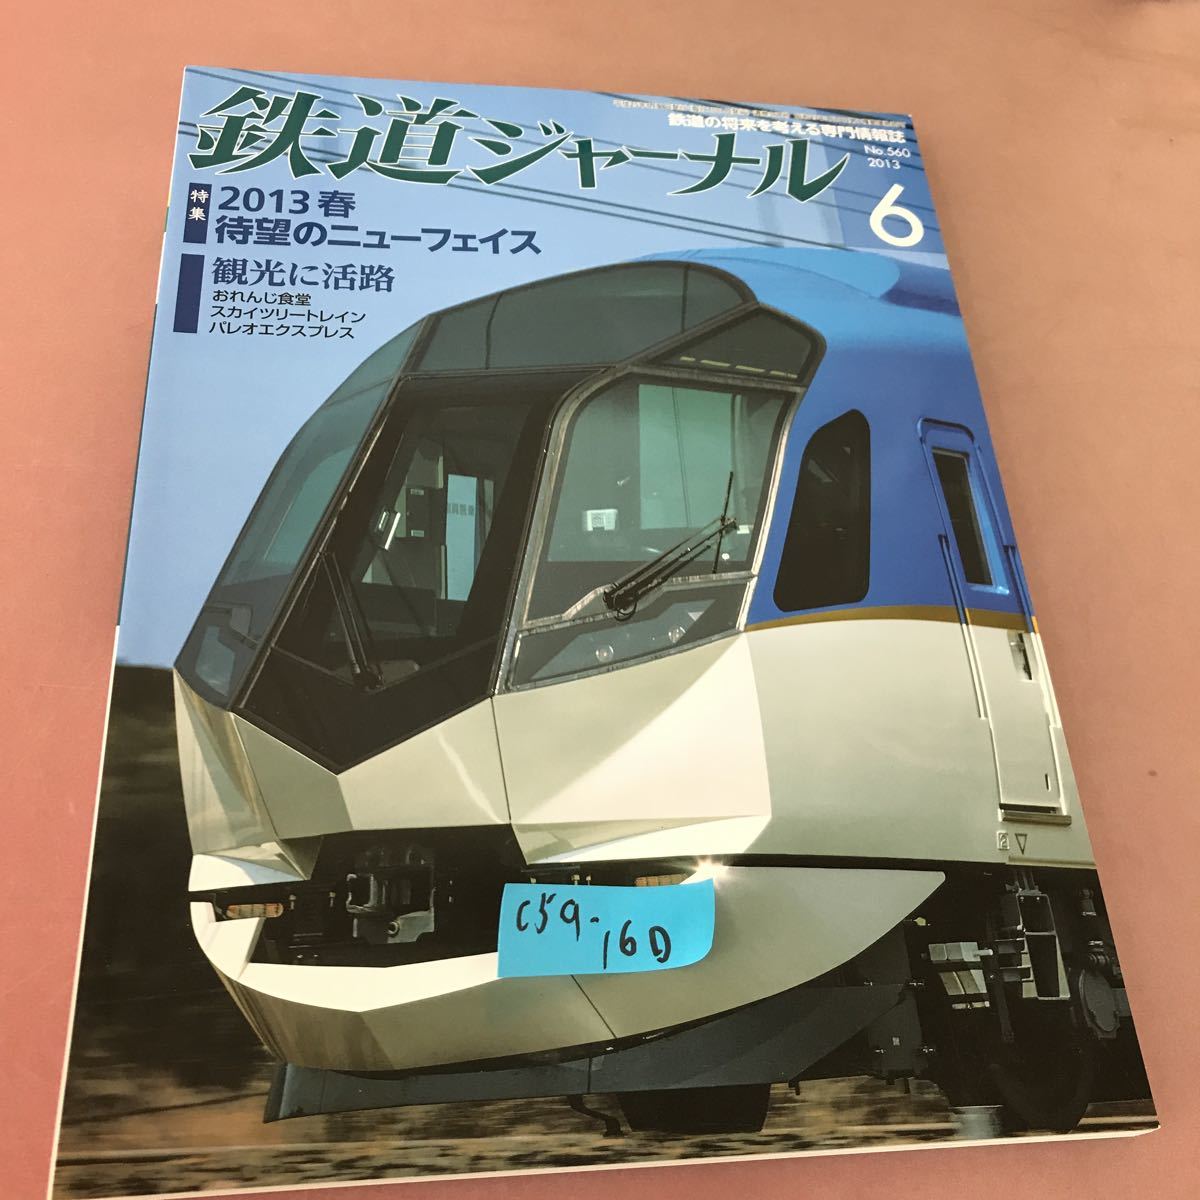 C59-160 鉄道ジャーナル 2013.6 特集 2013春 待望のニューフェイス No.560